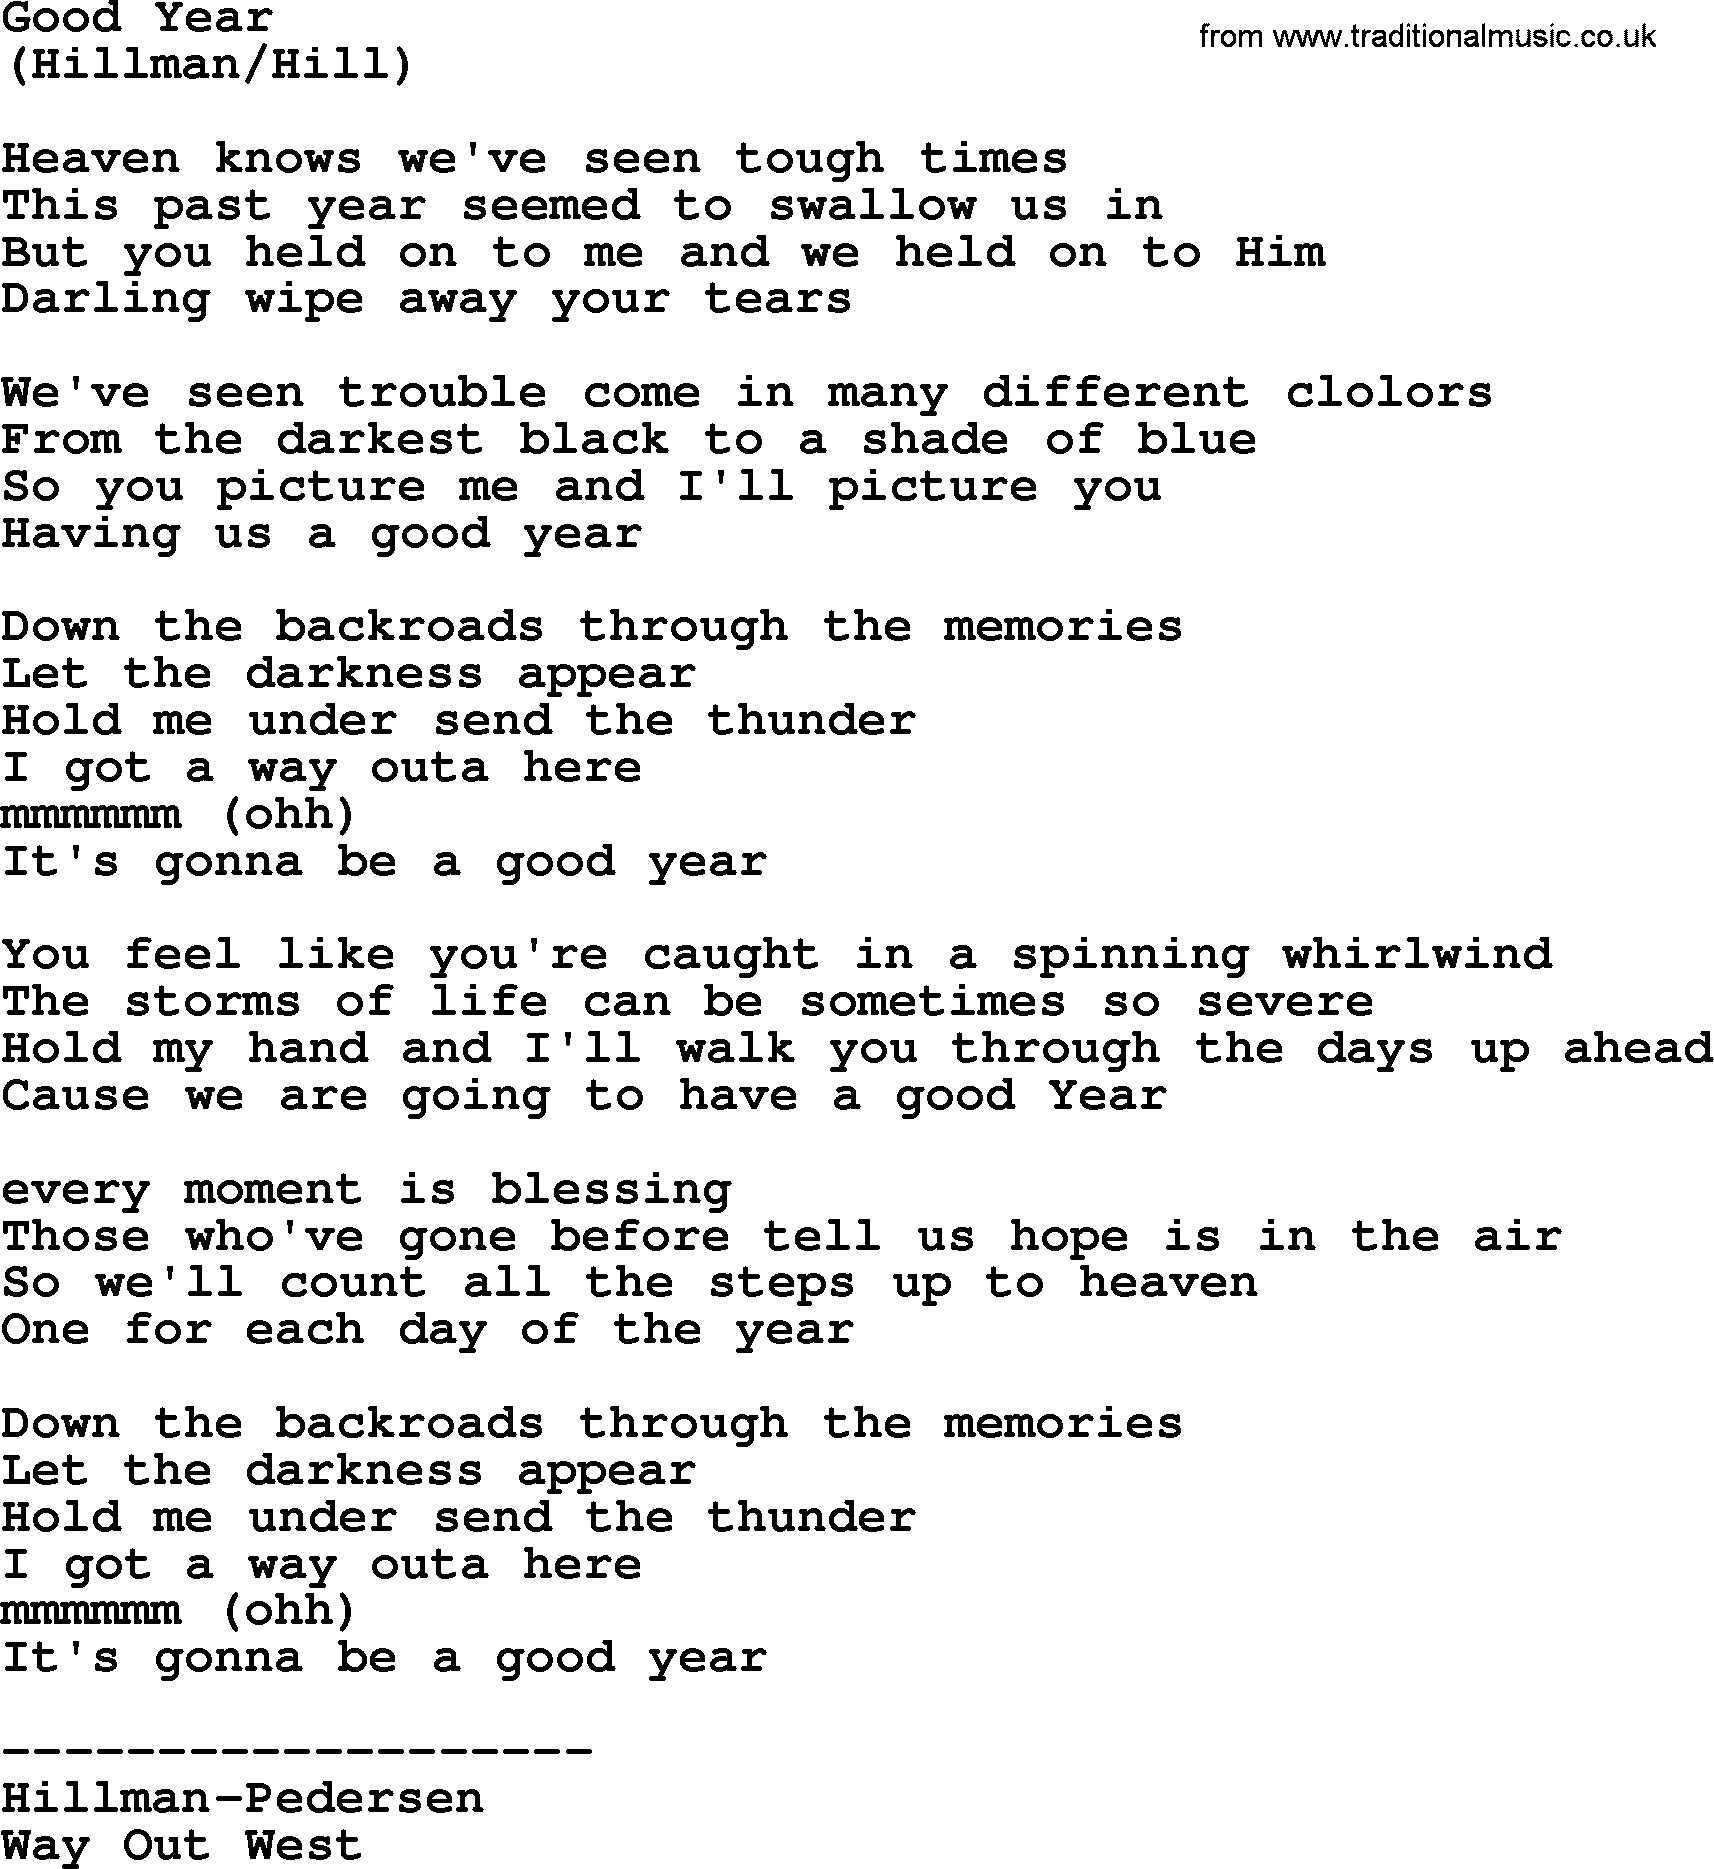 The Byrds song Good Year, lyrics